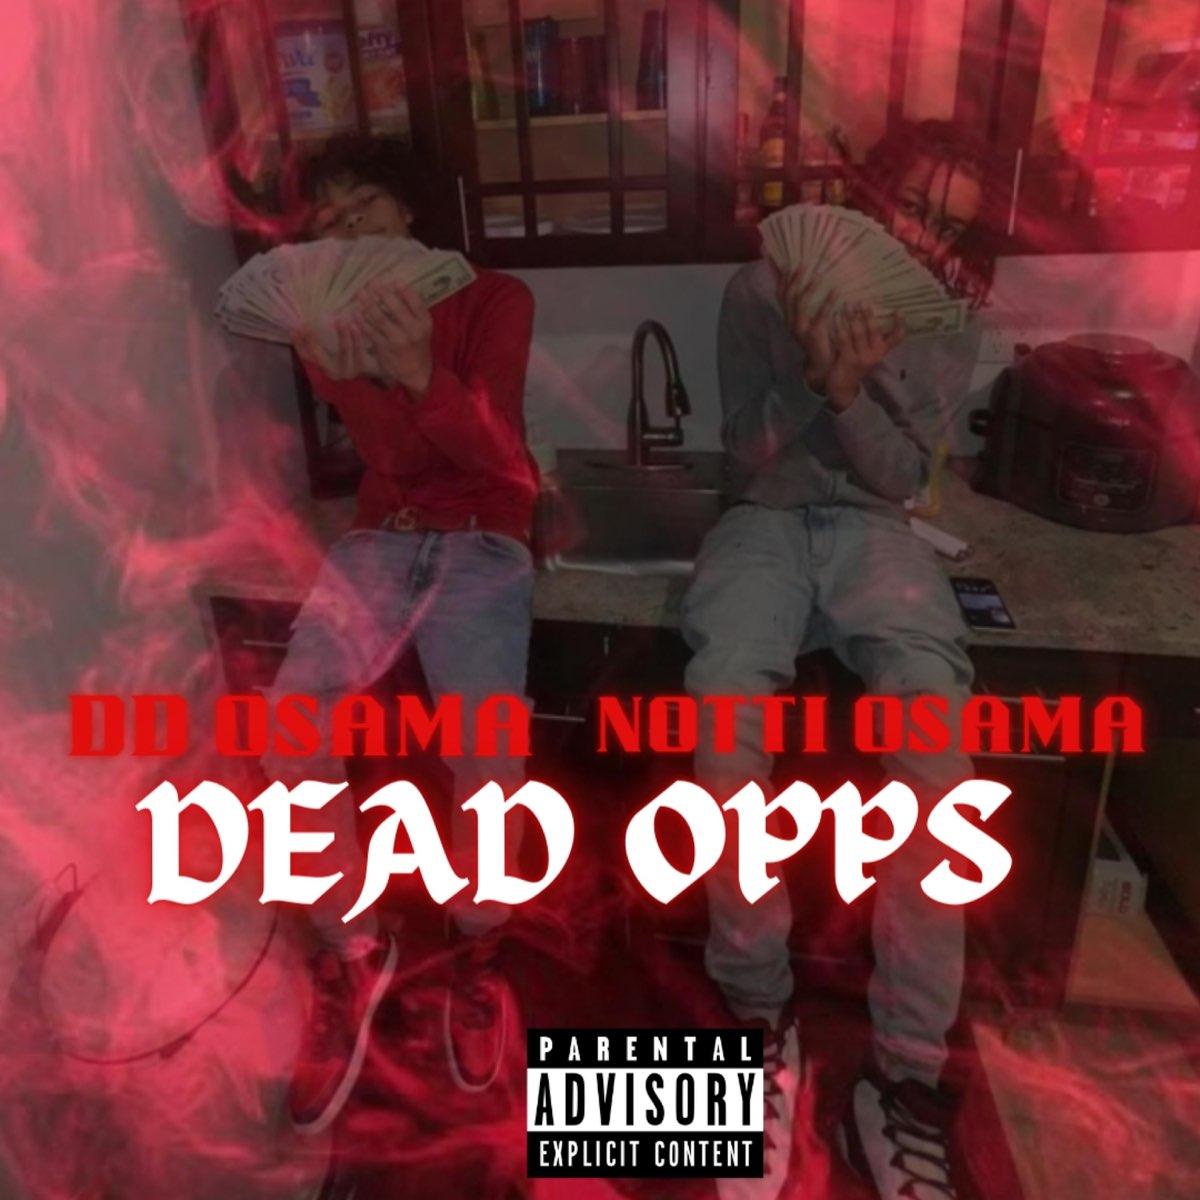 ‎Dead Opps (feat. Notti Osama) Single by DD Osama on Apple Music